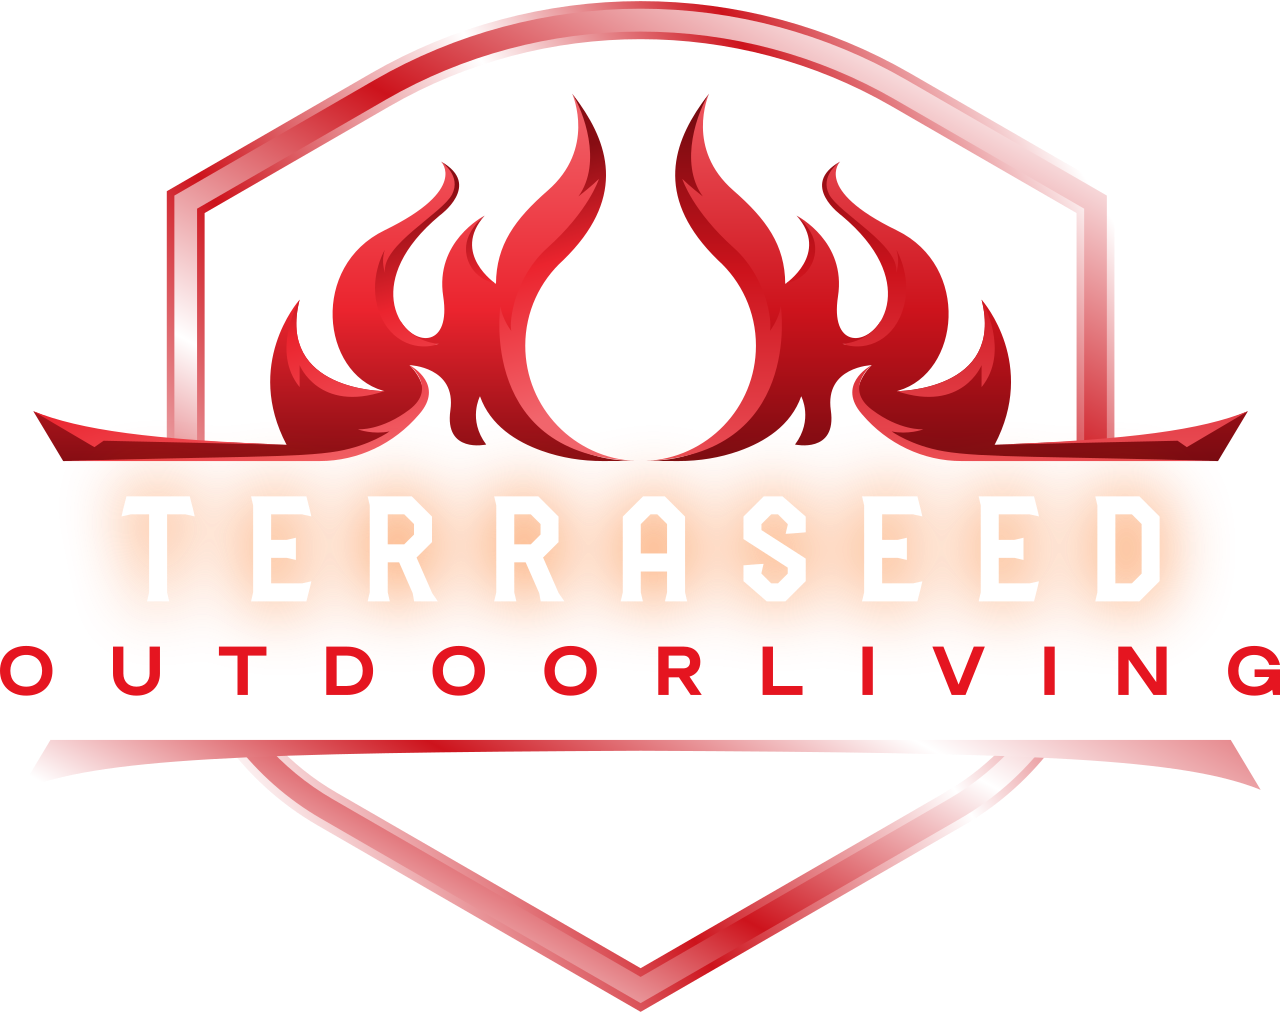 Terraseed's logo